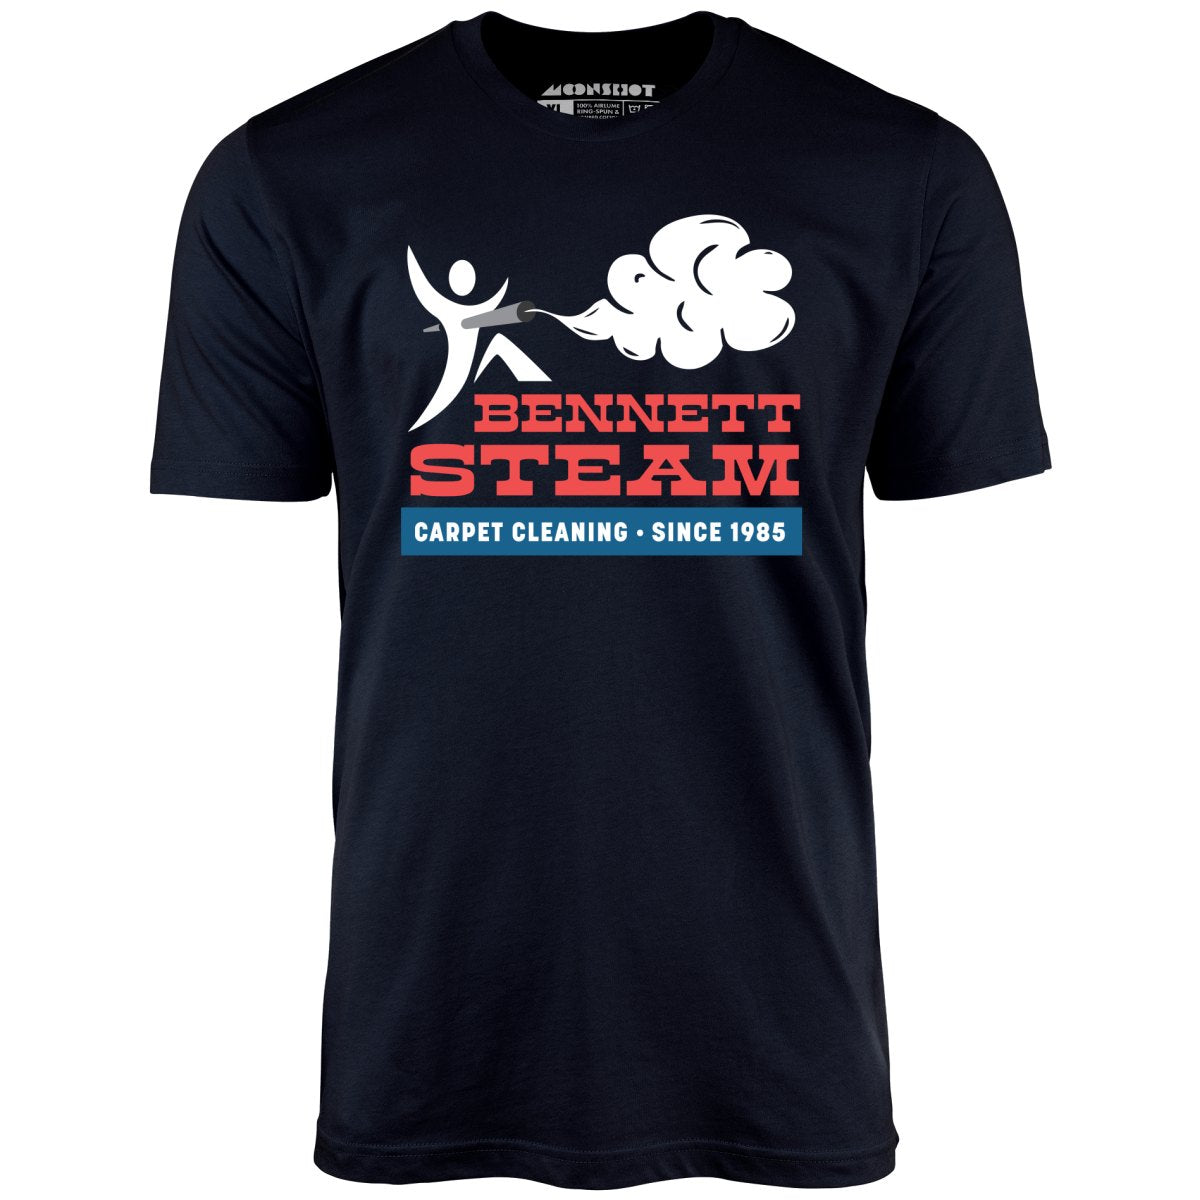 Bennett Steam Carpet Cleaning - Commando - Unisex T-Shirt